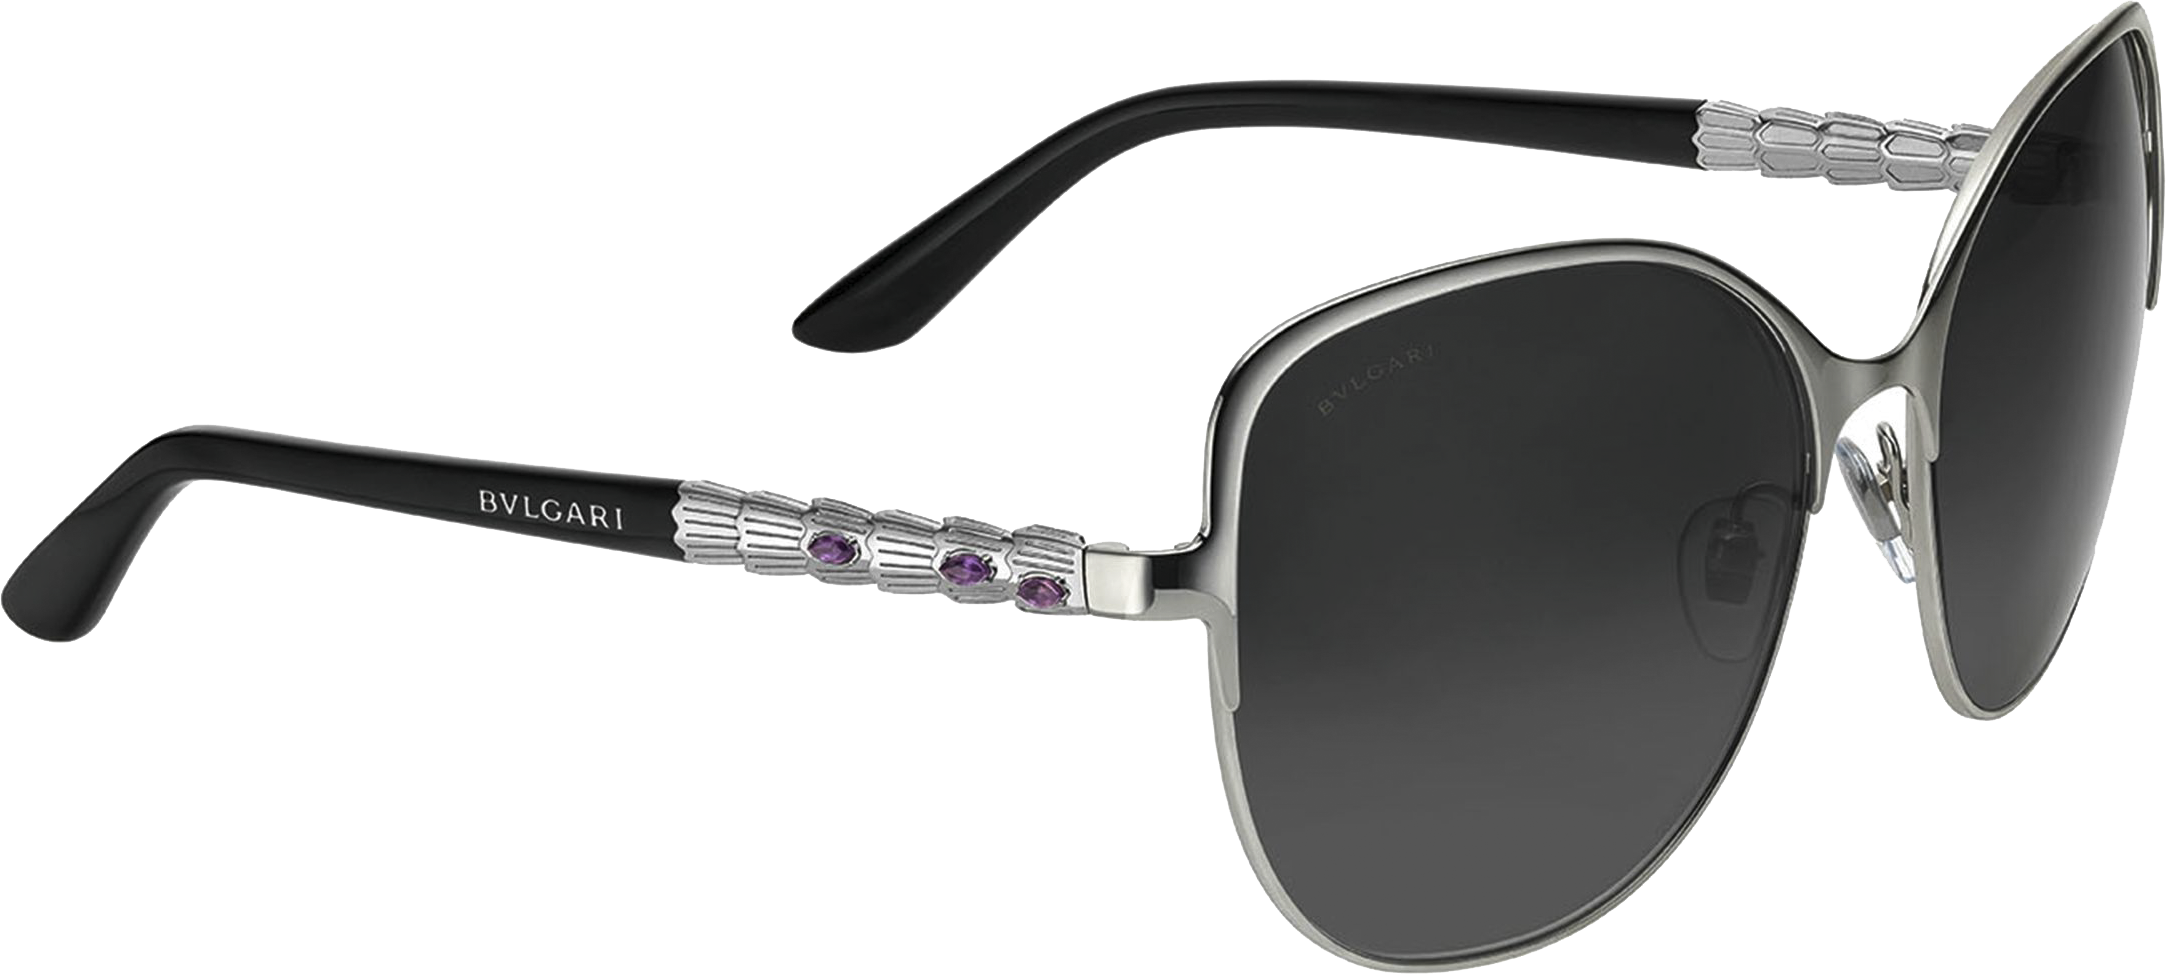 Gemstone Goggles Sunglasses Bulgari Fashion PNG Download Free Clipart